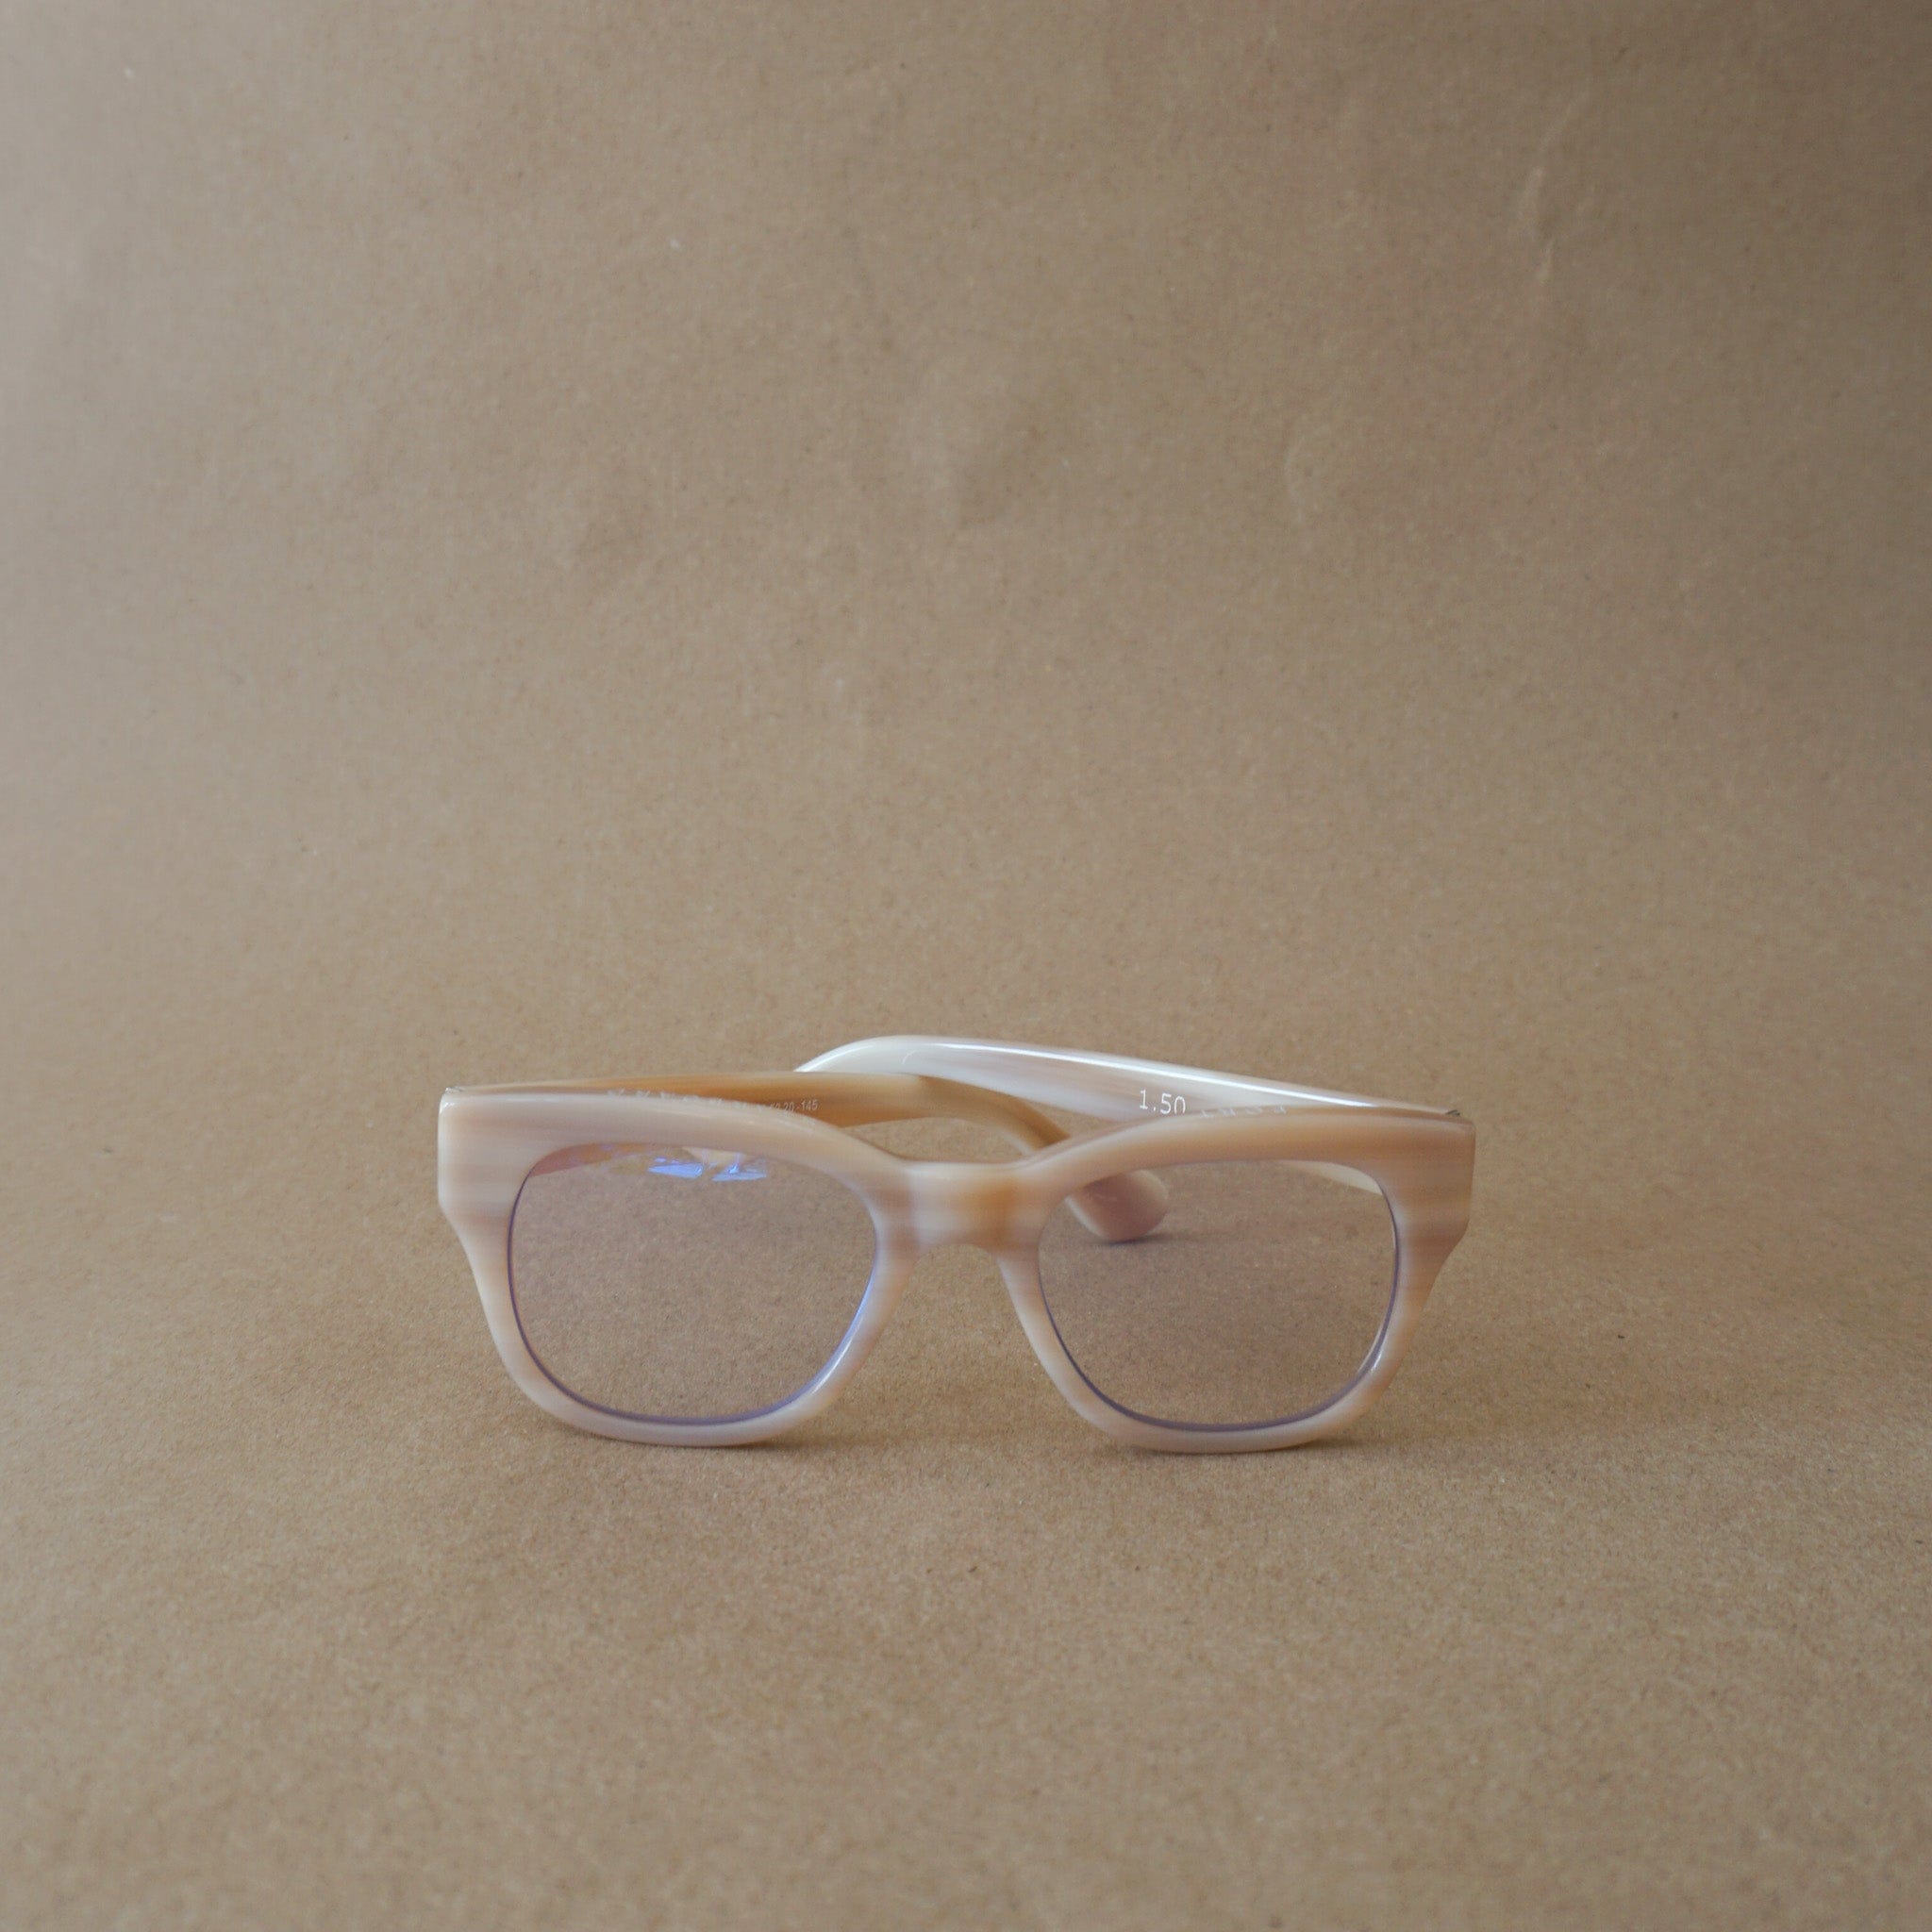 Caddis Glasses 0.00 Miklos Reading Glasses by Caddis - Polished Bone